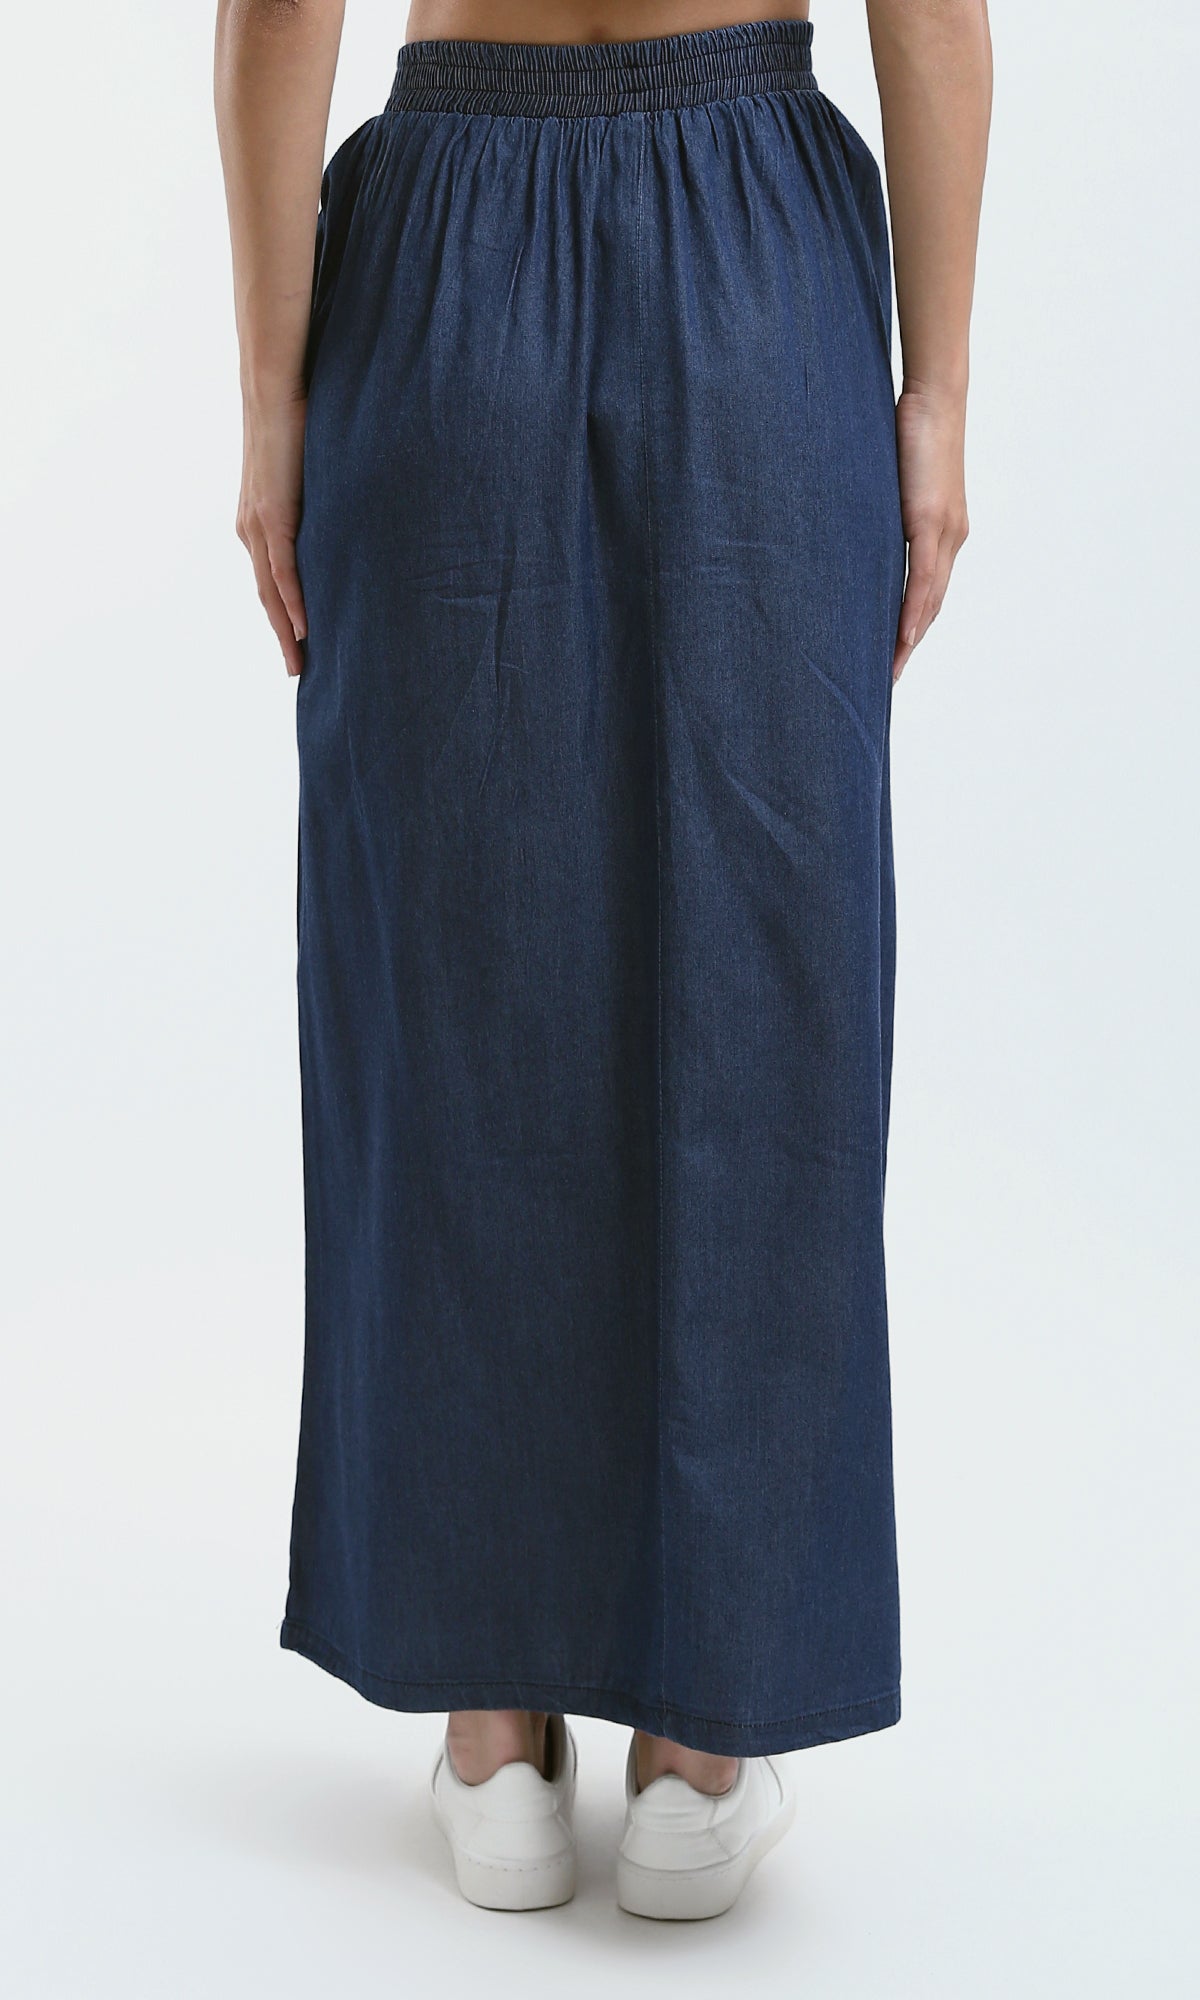 O182851 Cotton Jeans Skirt With Elastic Waist - Dark Blue